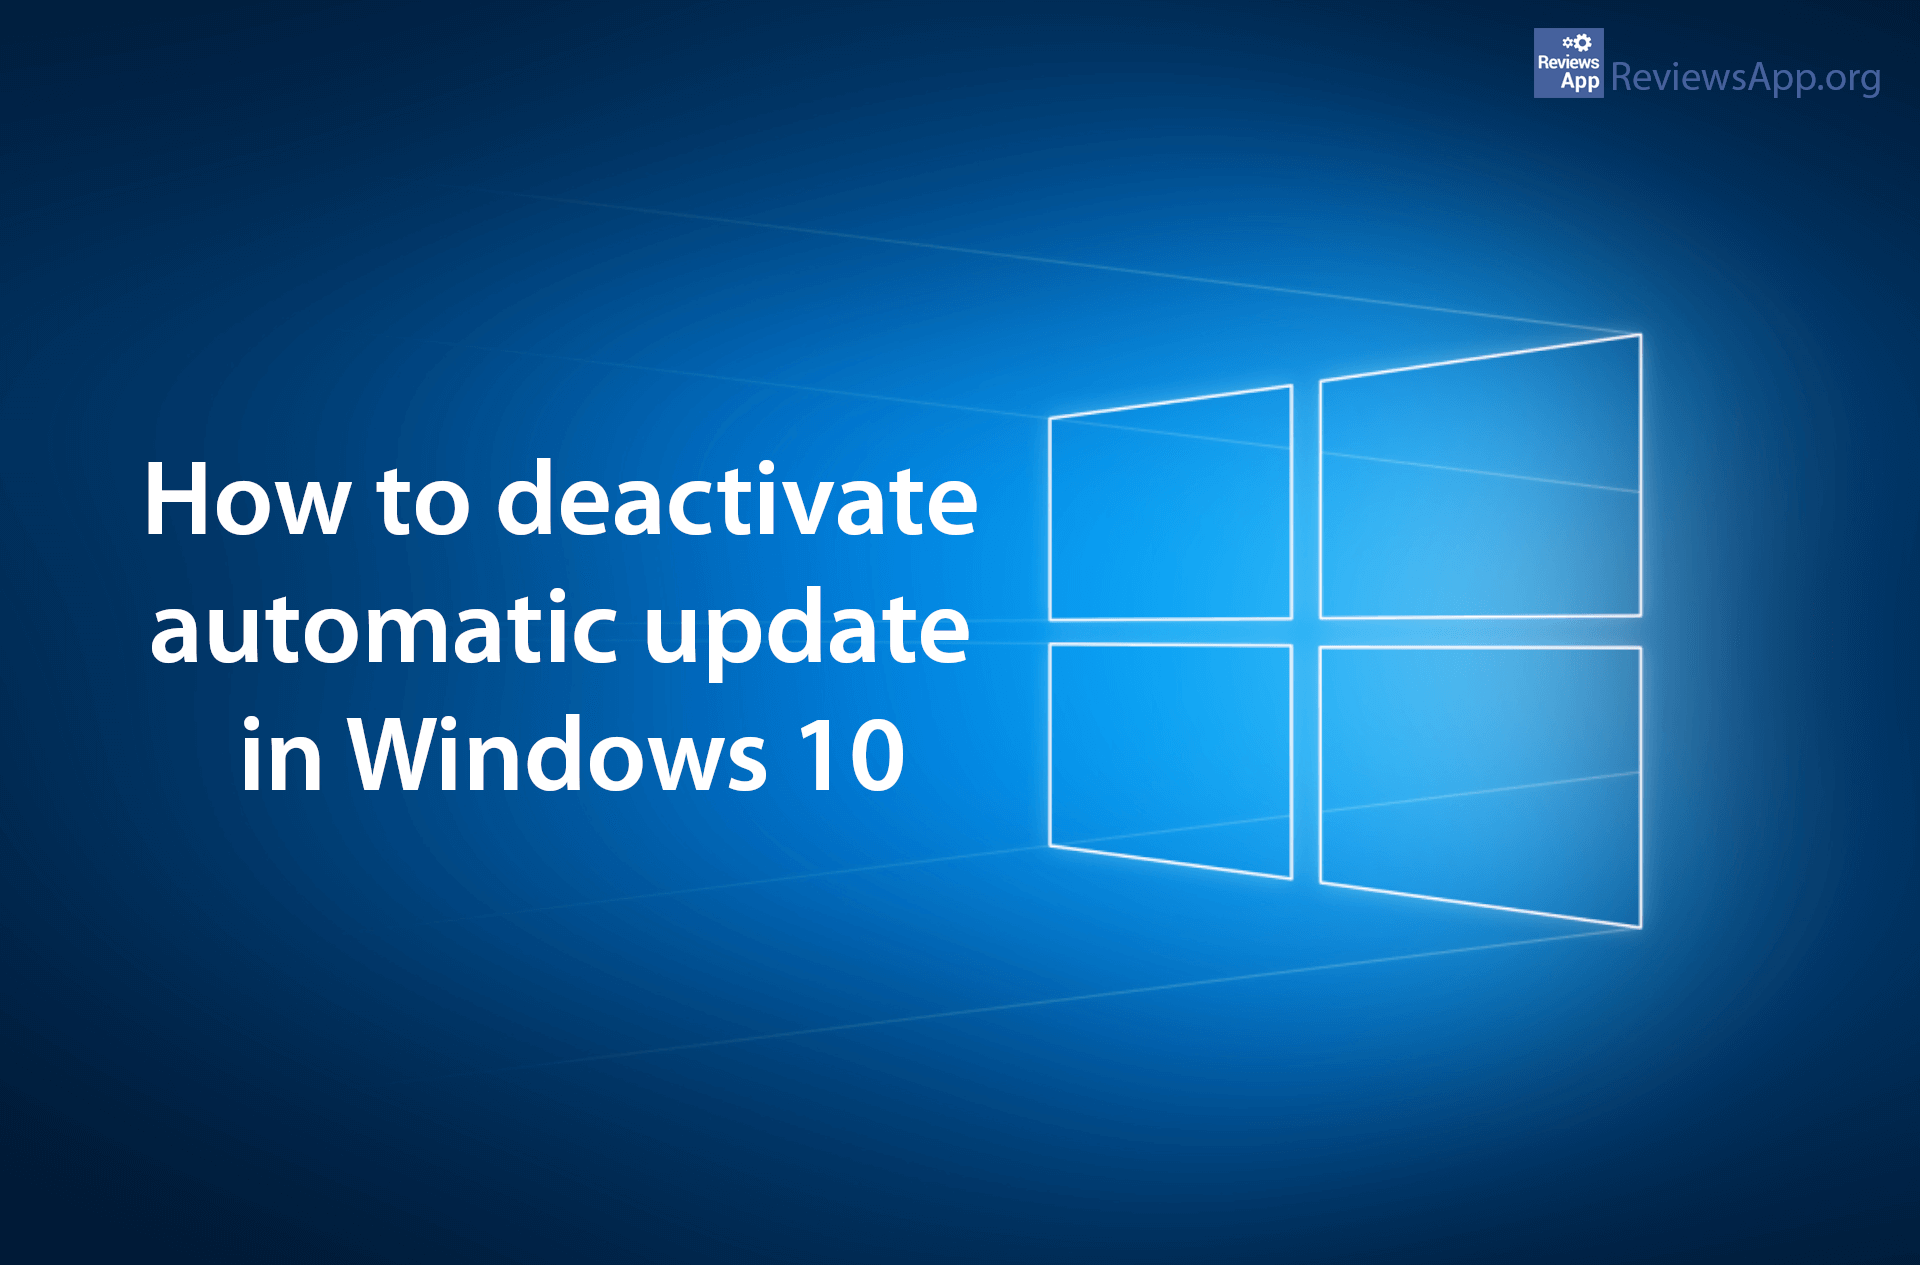 Deactivate automatic update in Windows 10